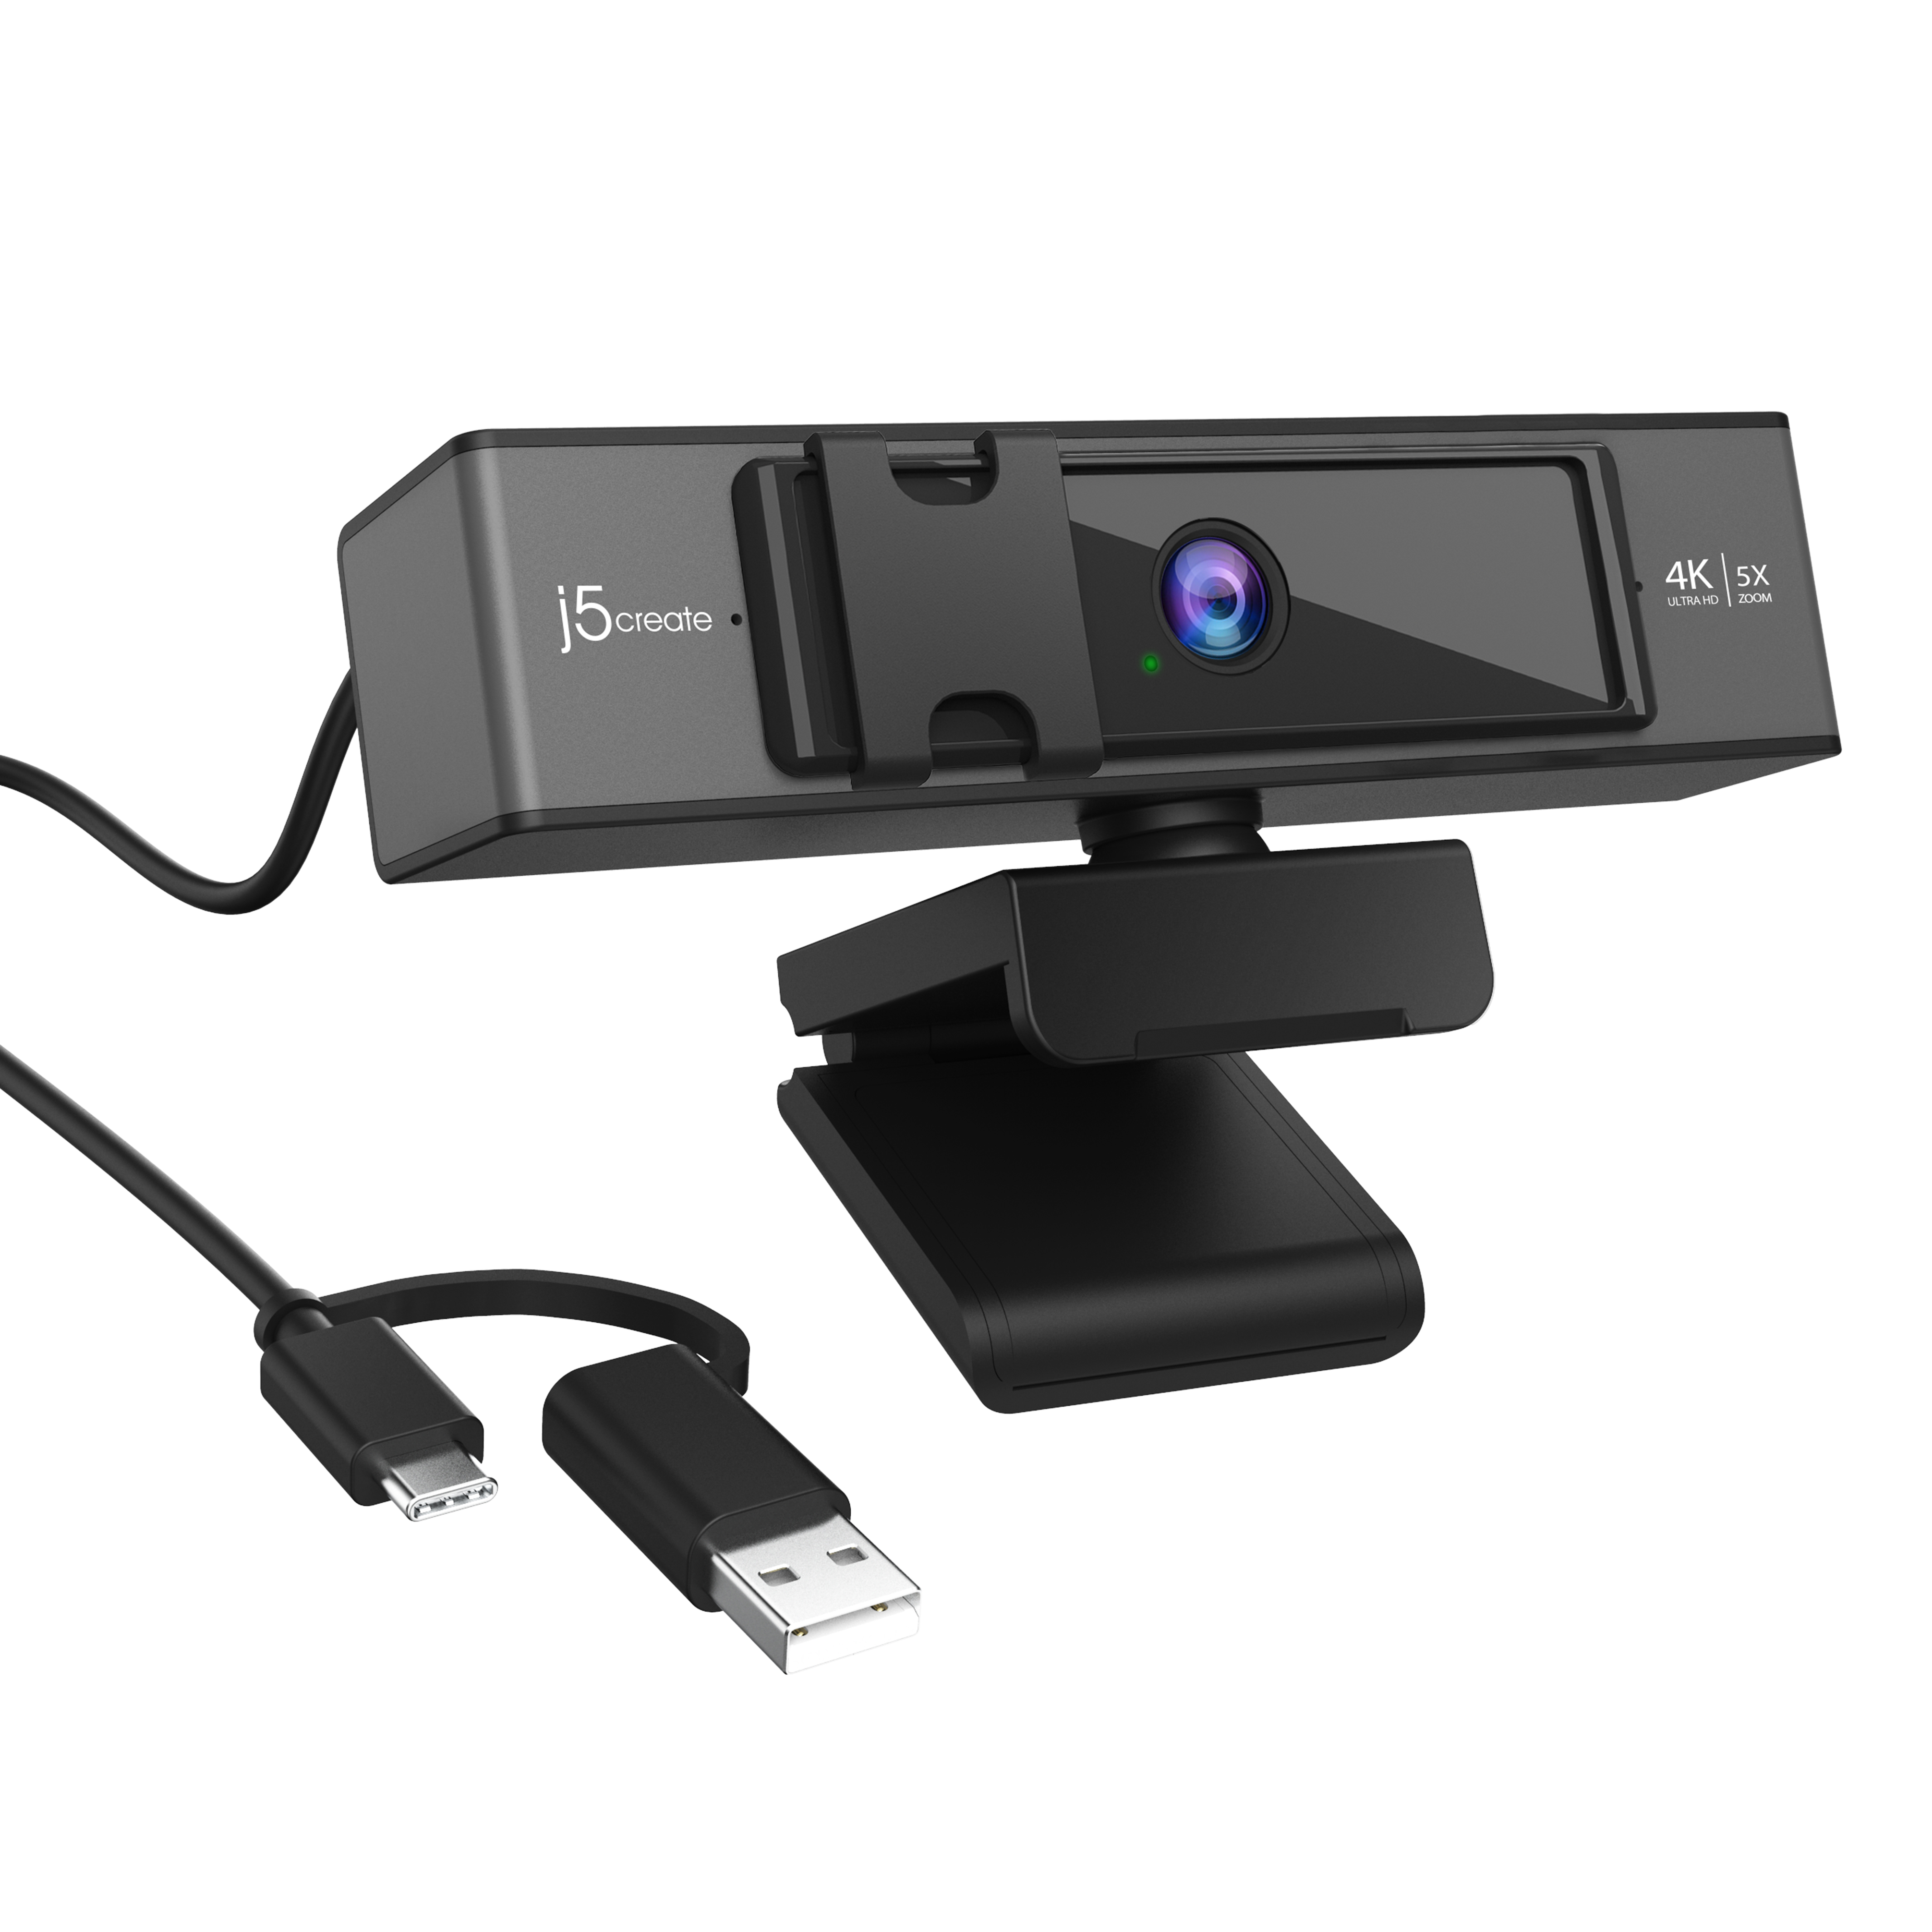 Zoom Webcam J5CREATE Digital USB Ultra JVCU435-N Control 5x 4K HD Remote